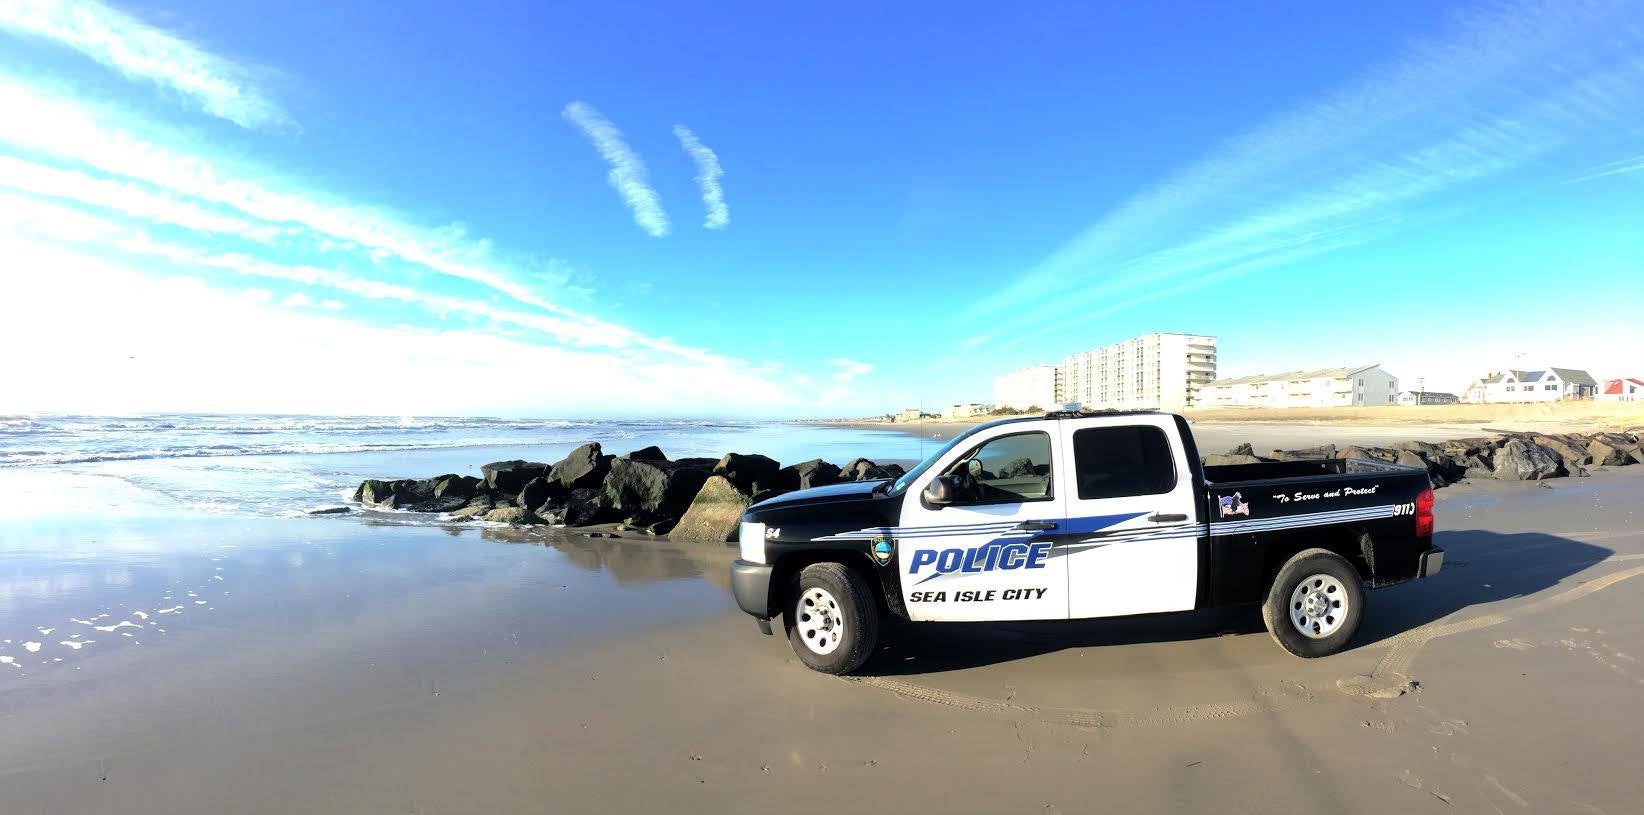  Sea Isle City Police Department image. 